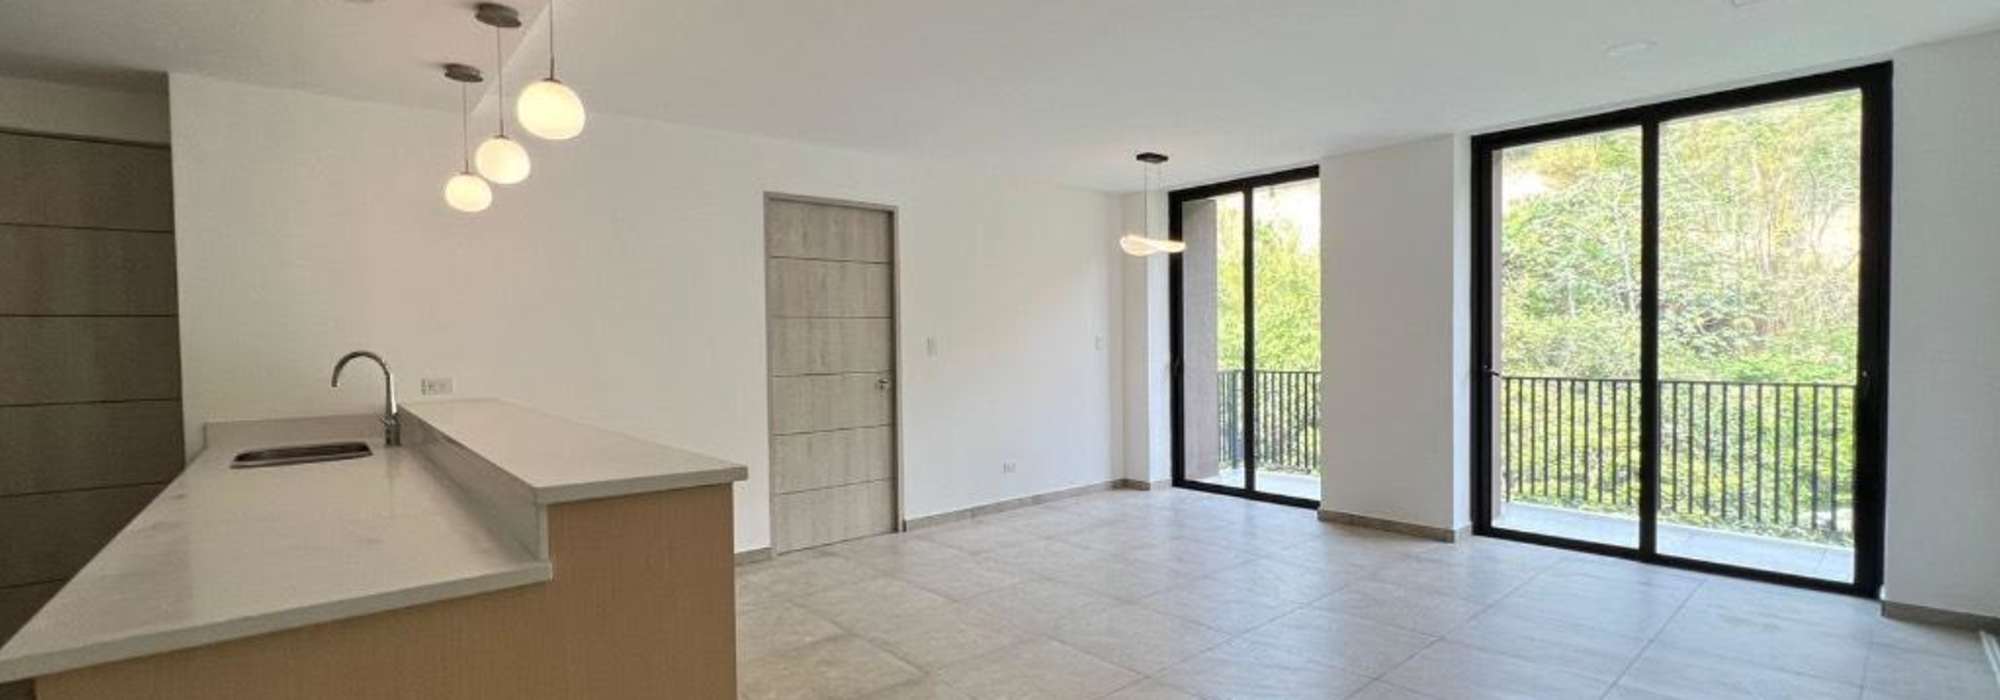 Brand new apartment with Bodega included - Artea 1 (New Cuscatlán)